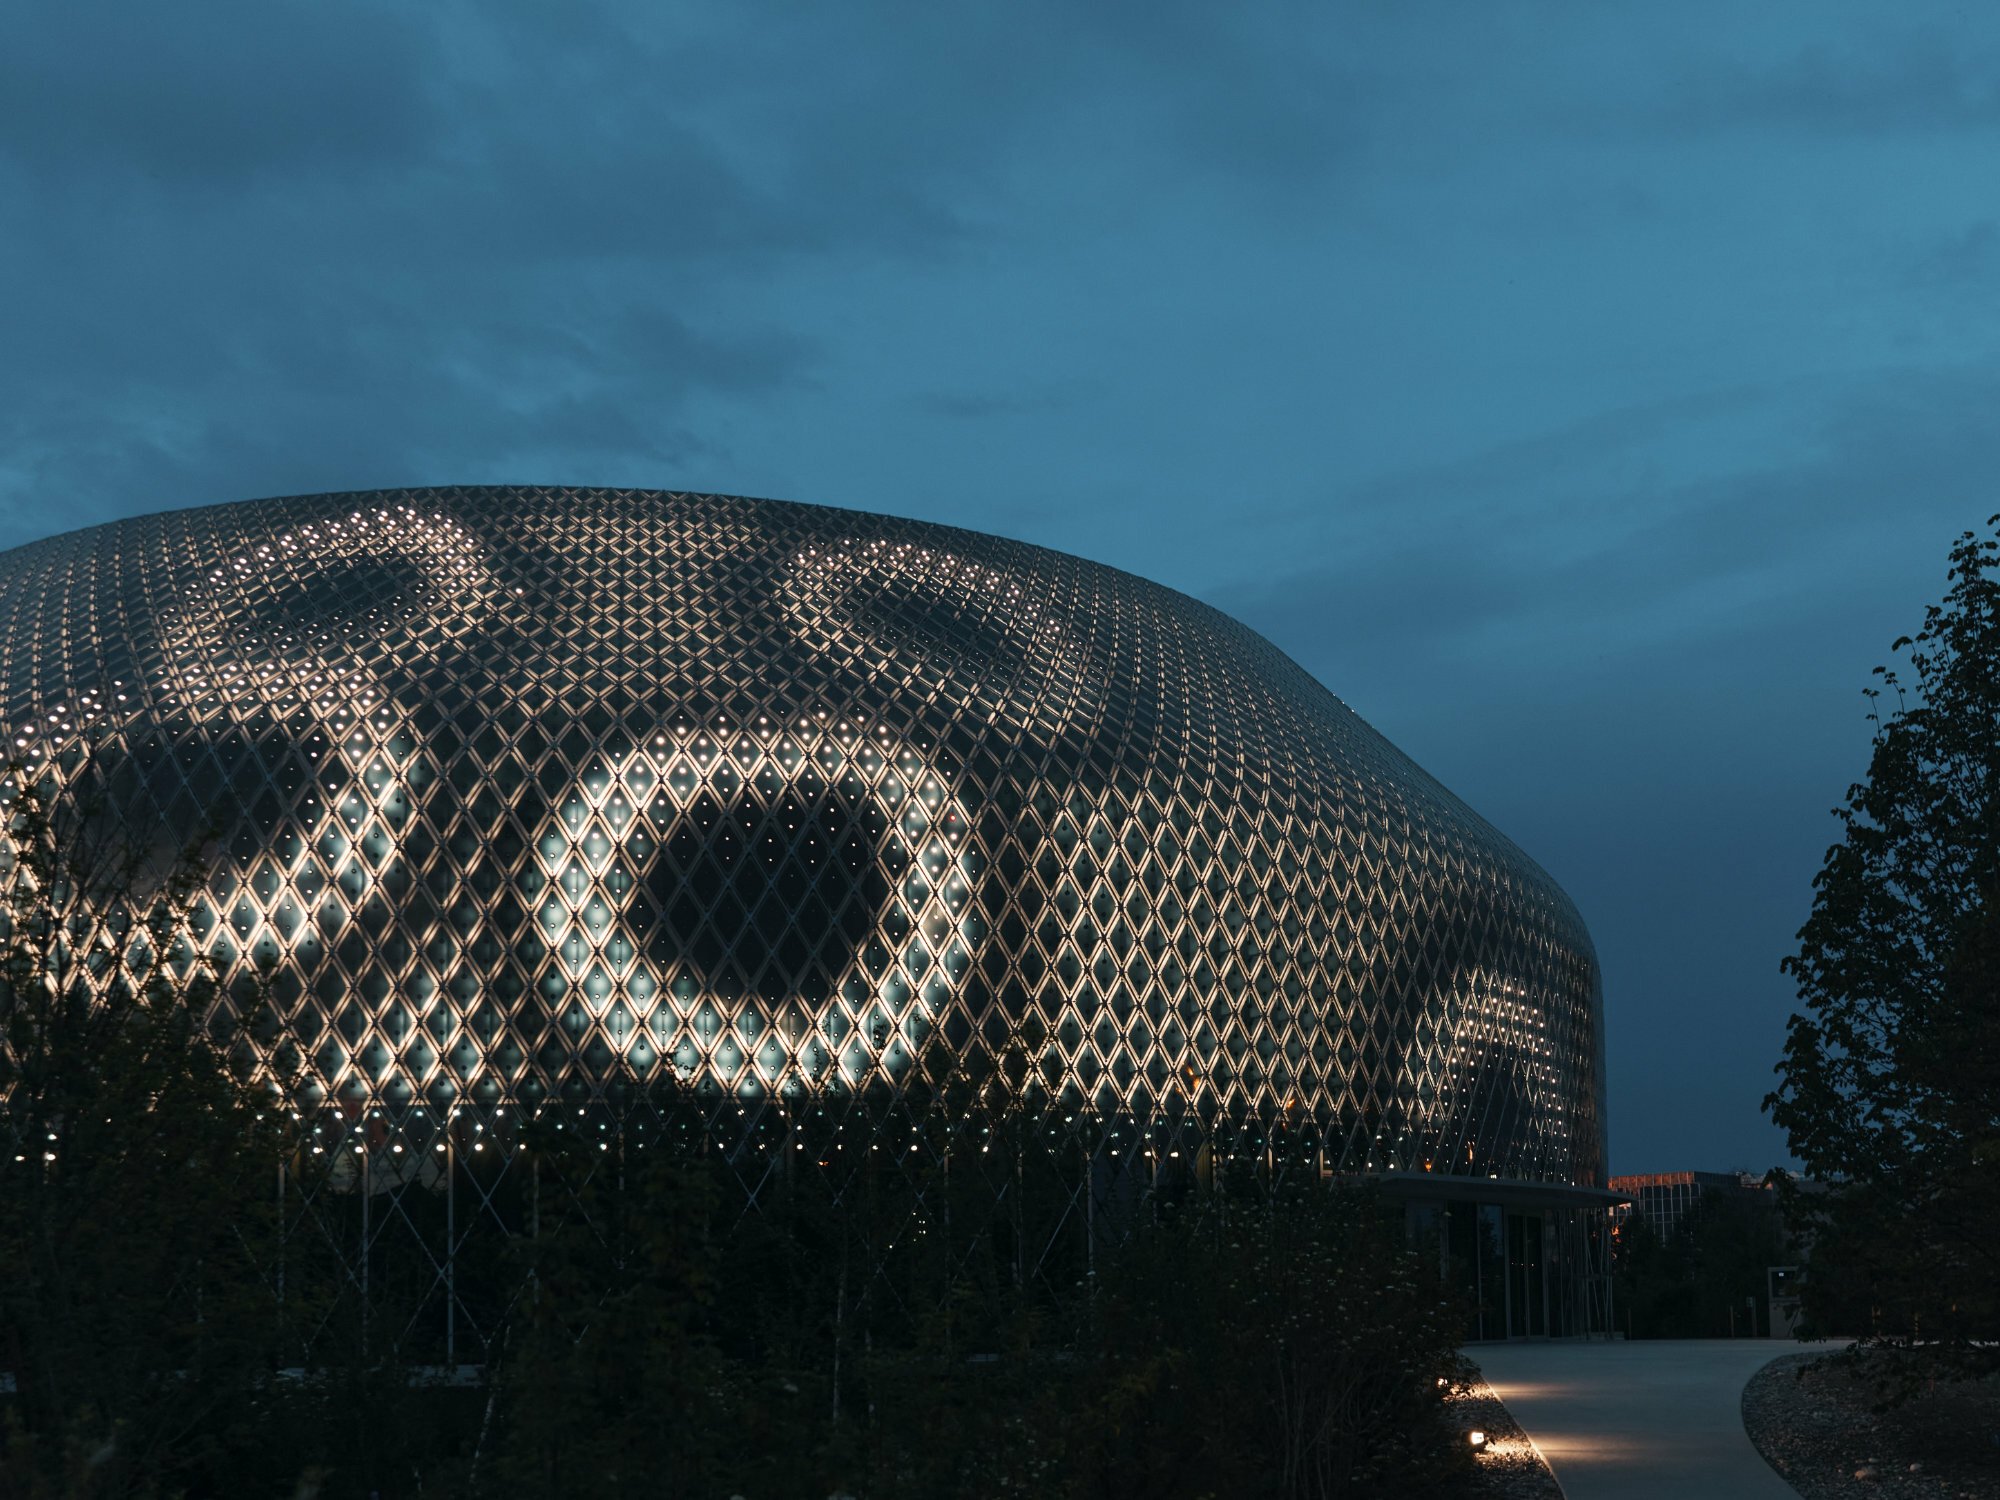 Rund 10.000 rautenförmige Photovoltaikmodule schmiegen sich um den ringförmigen Novartis Pavillon in Basel.